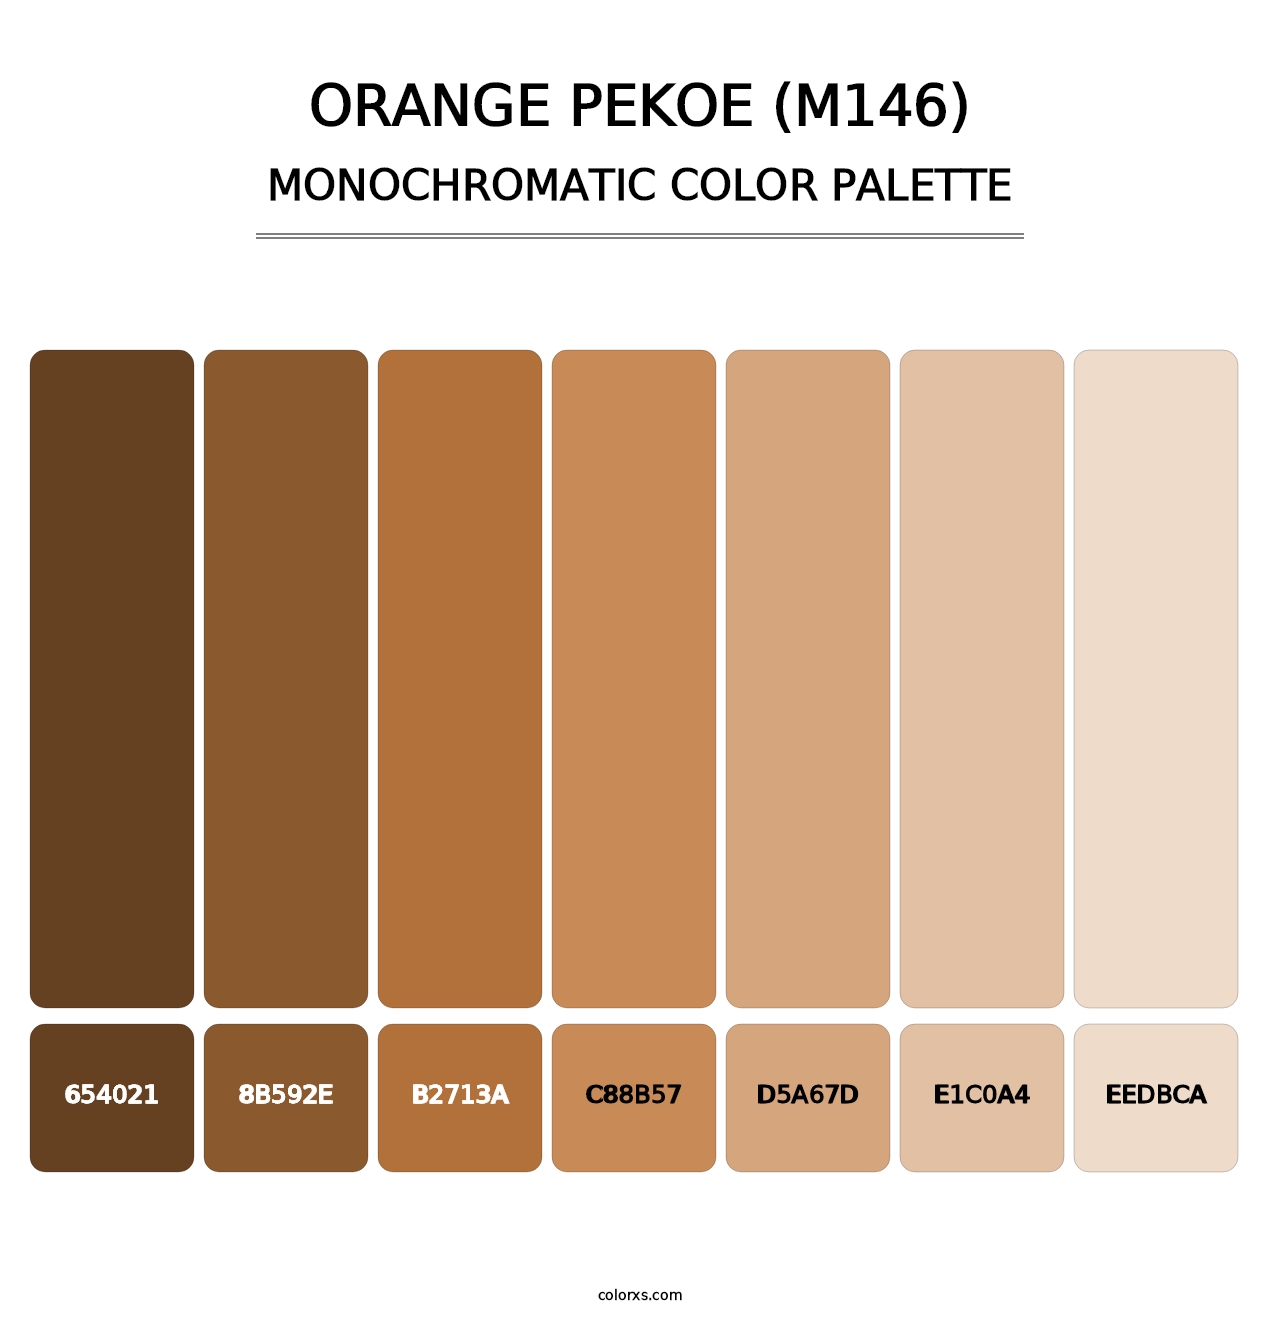 Orange Pekoe (M146) - Monochromatic Color Palette